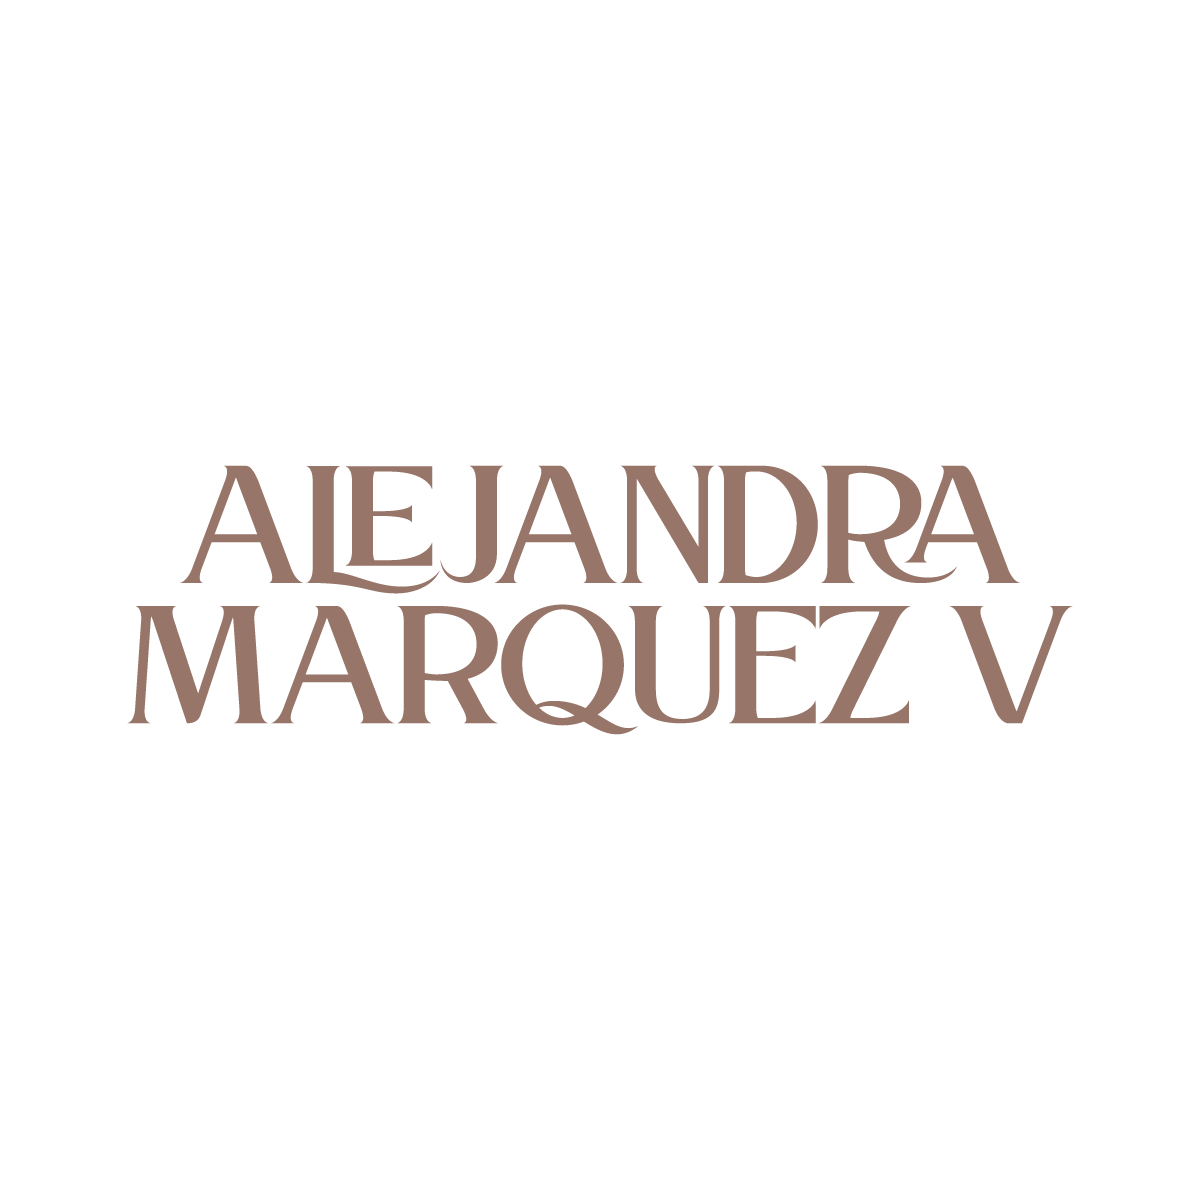 Alejandra Marquez V